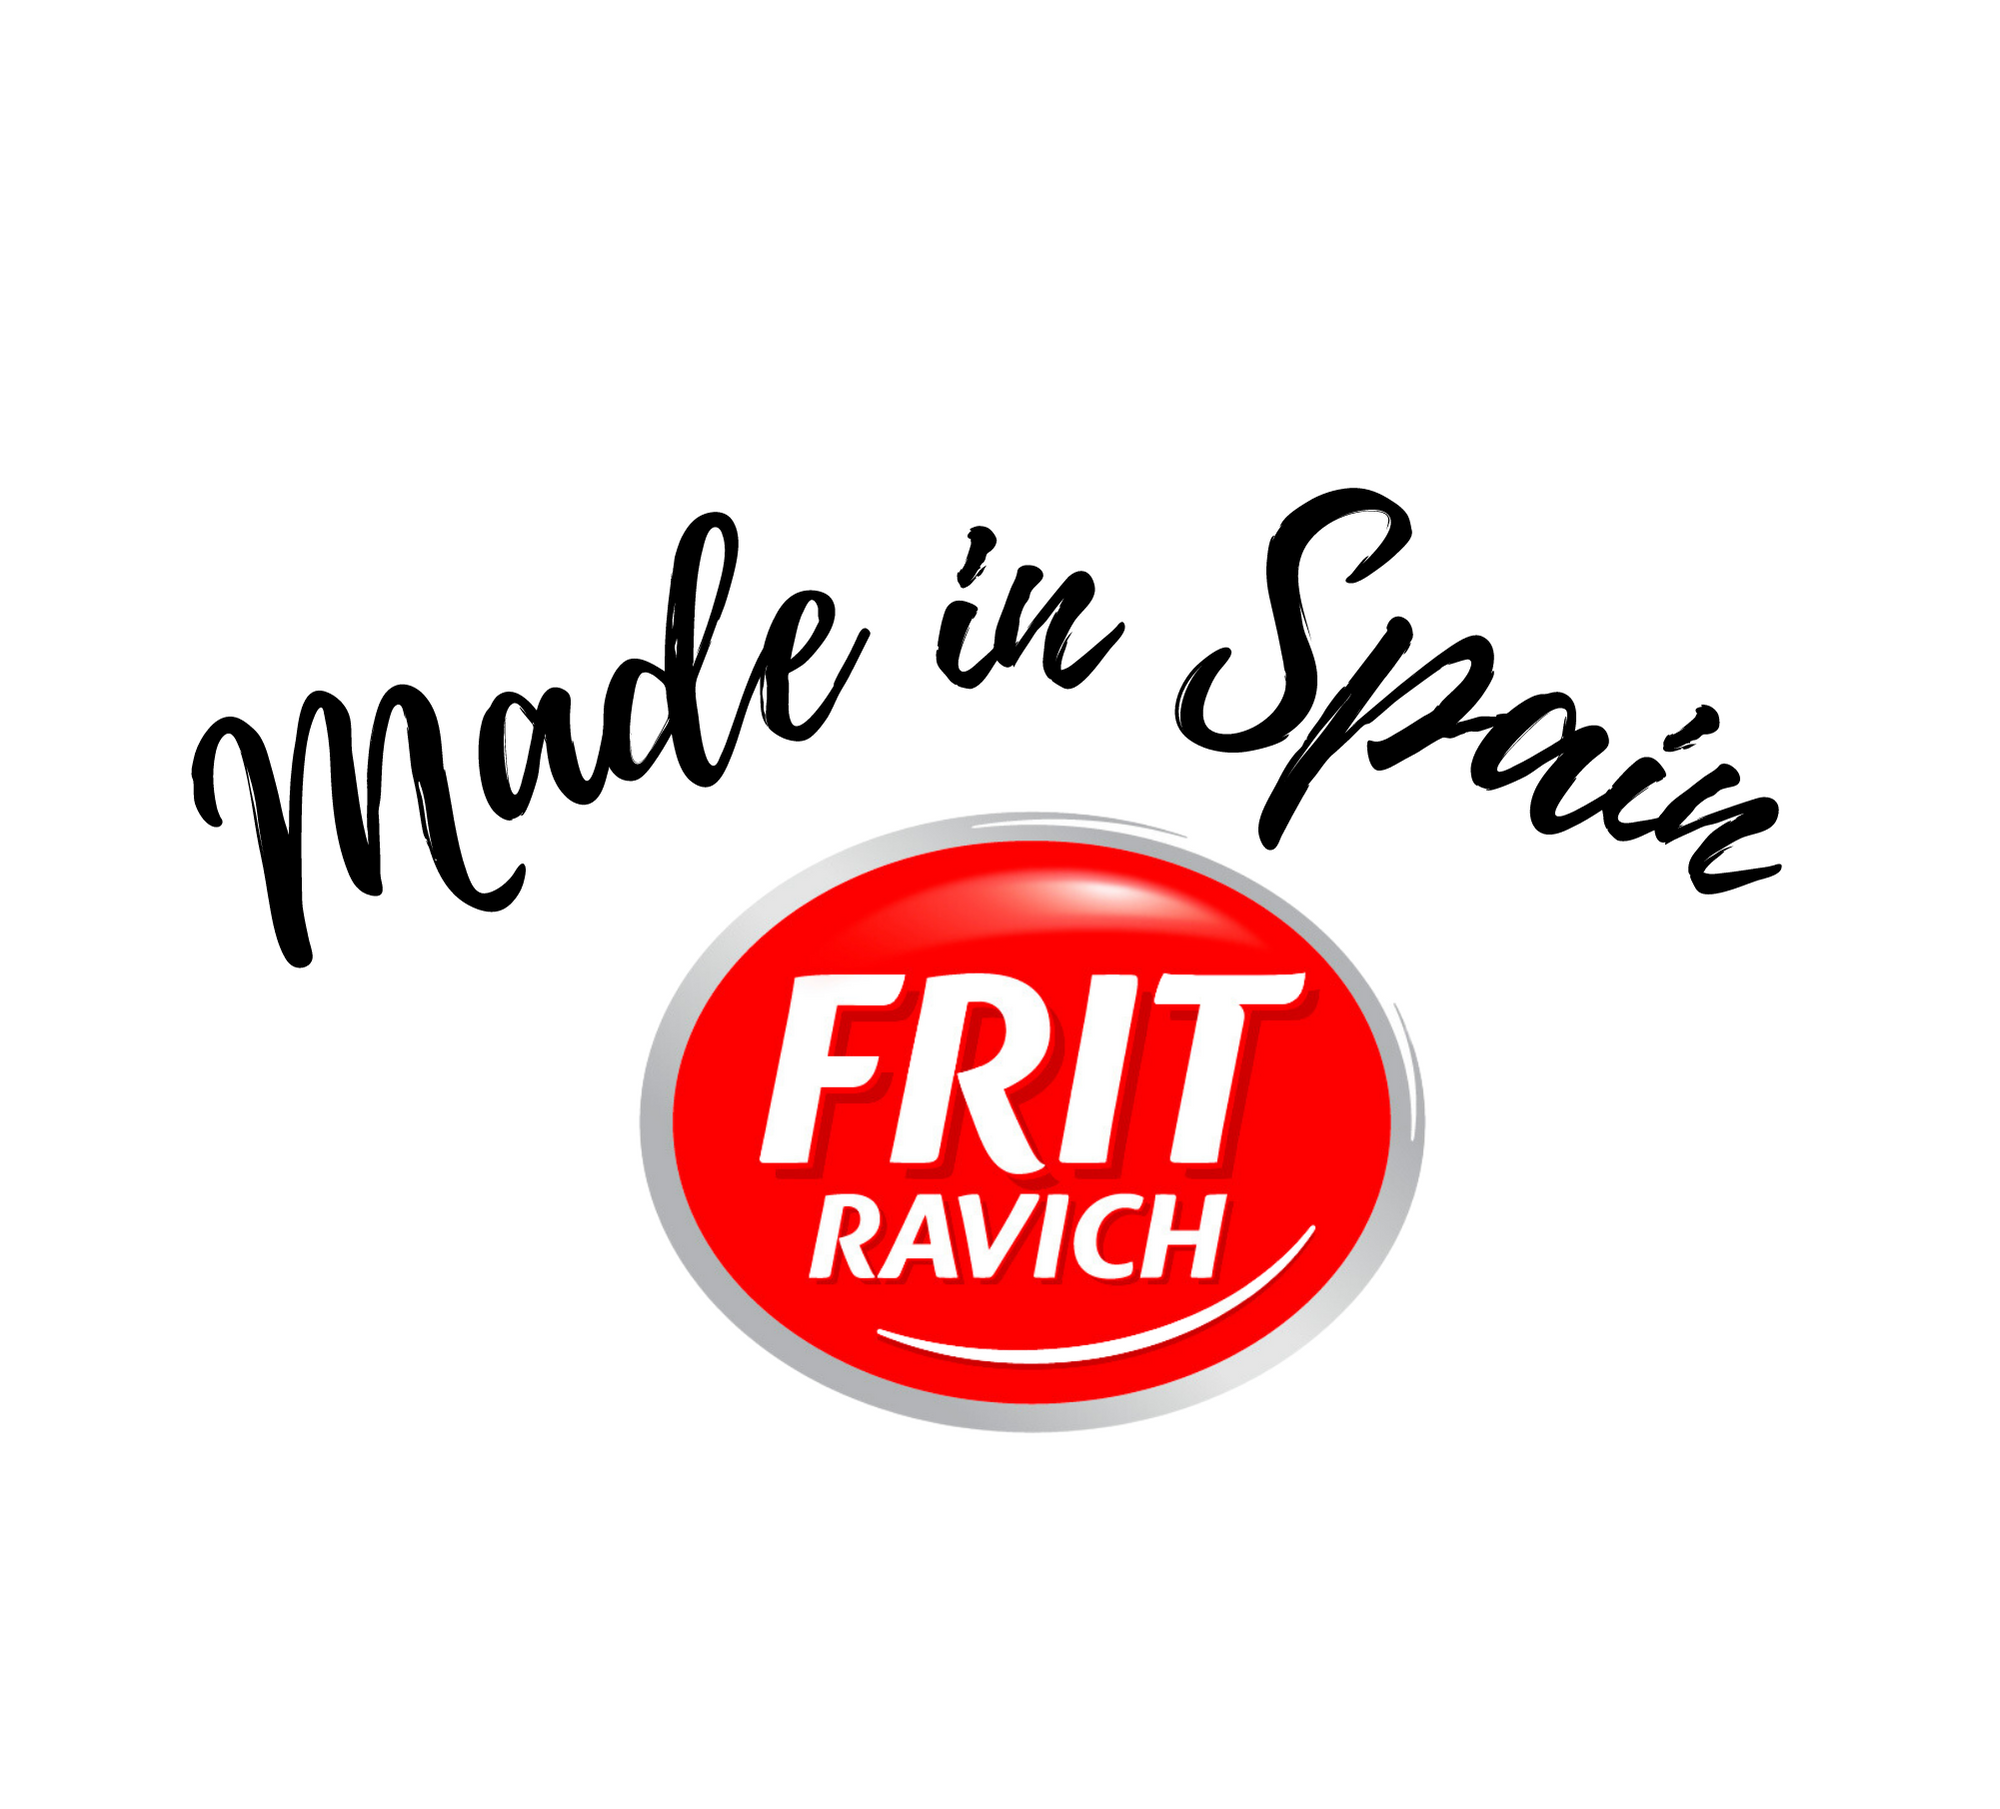 Frit Ravich Chilli Flavour Spanish Crisps